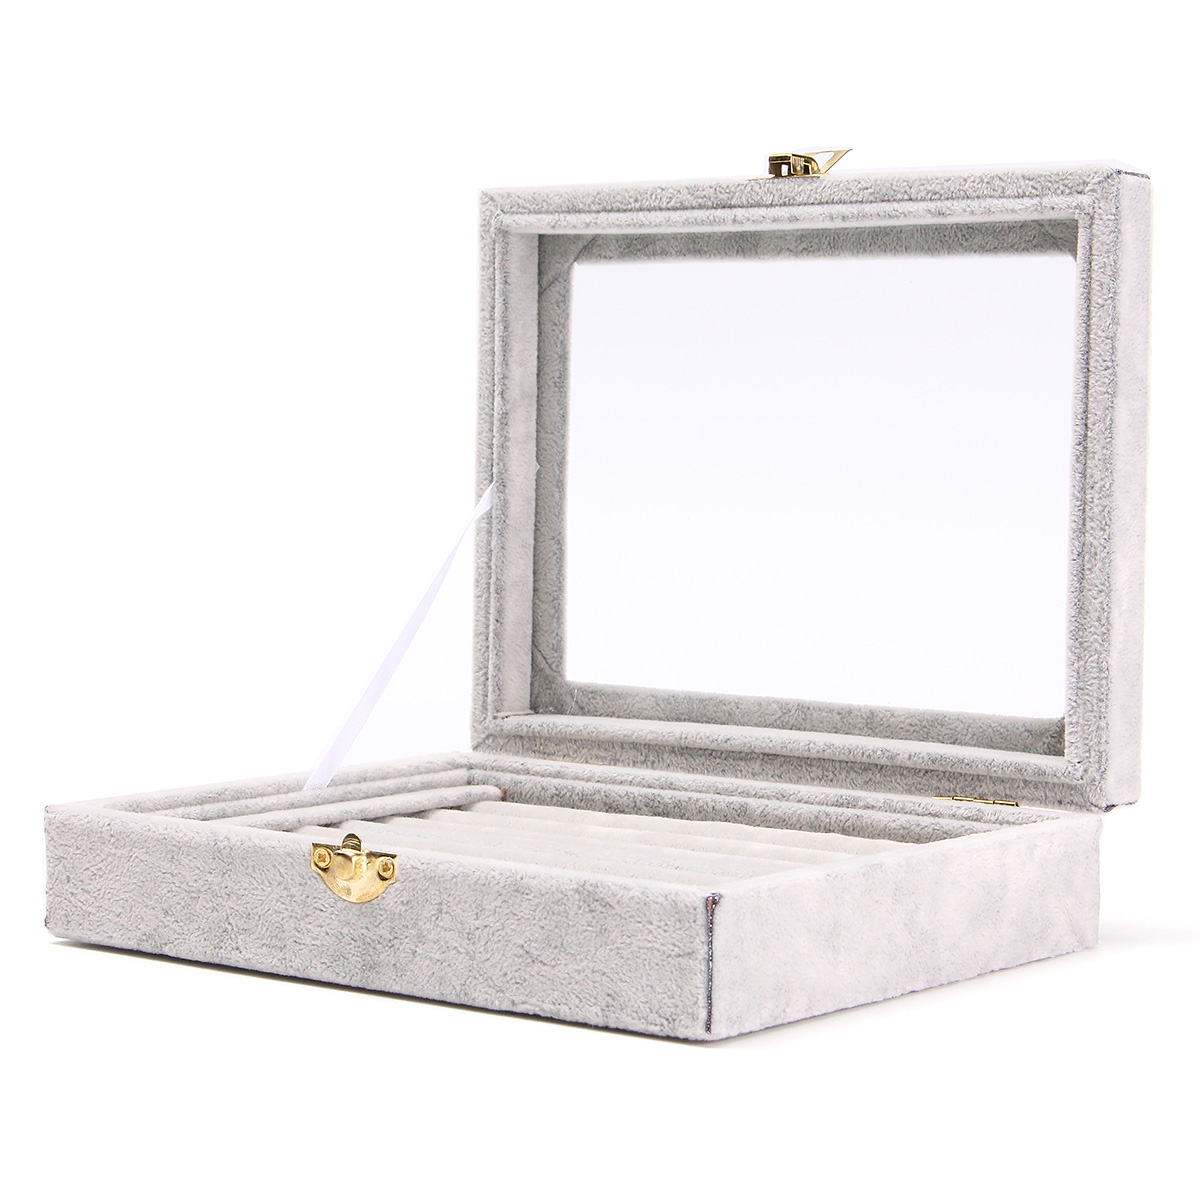 Jewelry-Velvet-Wood-Ring-Display-Organizer-Case-Tray-Holder-Earring-Storage-Box-1221119-6